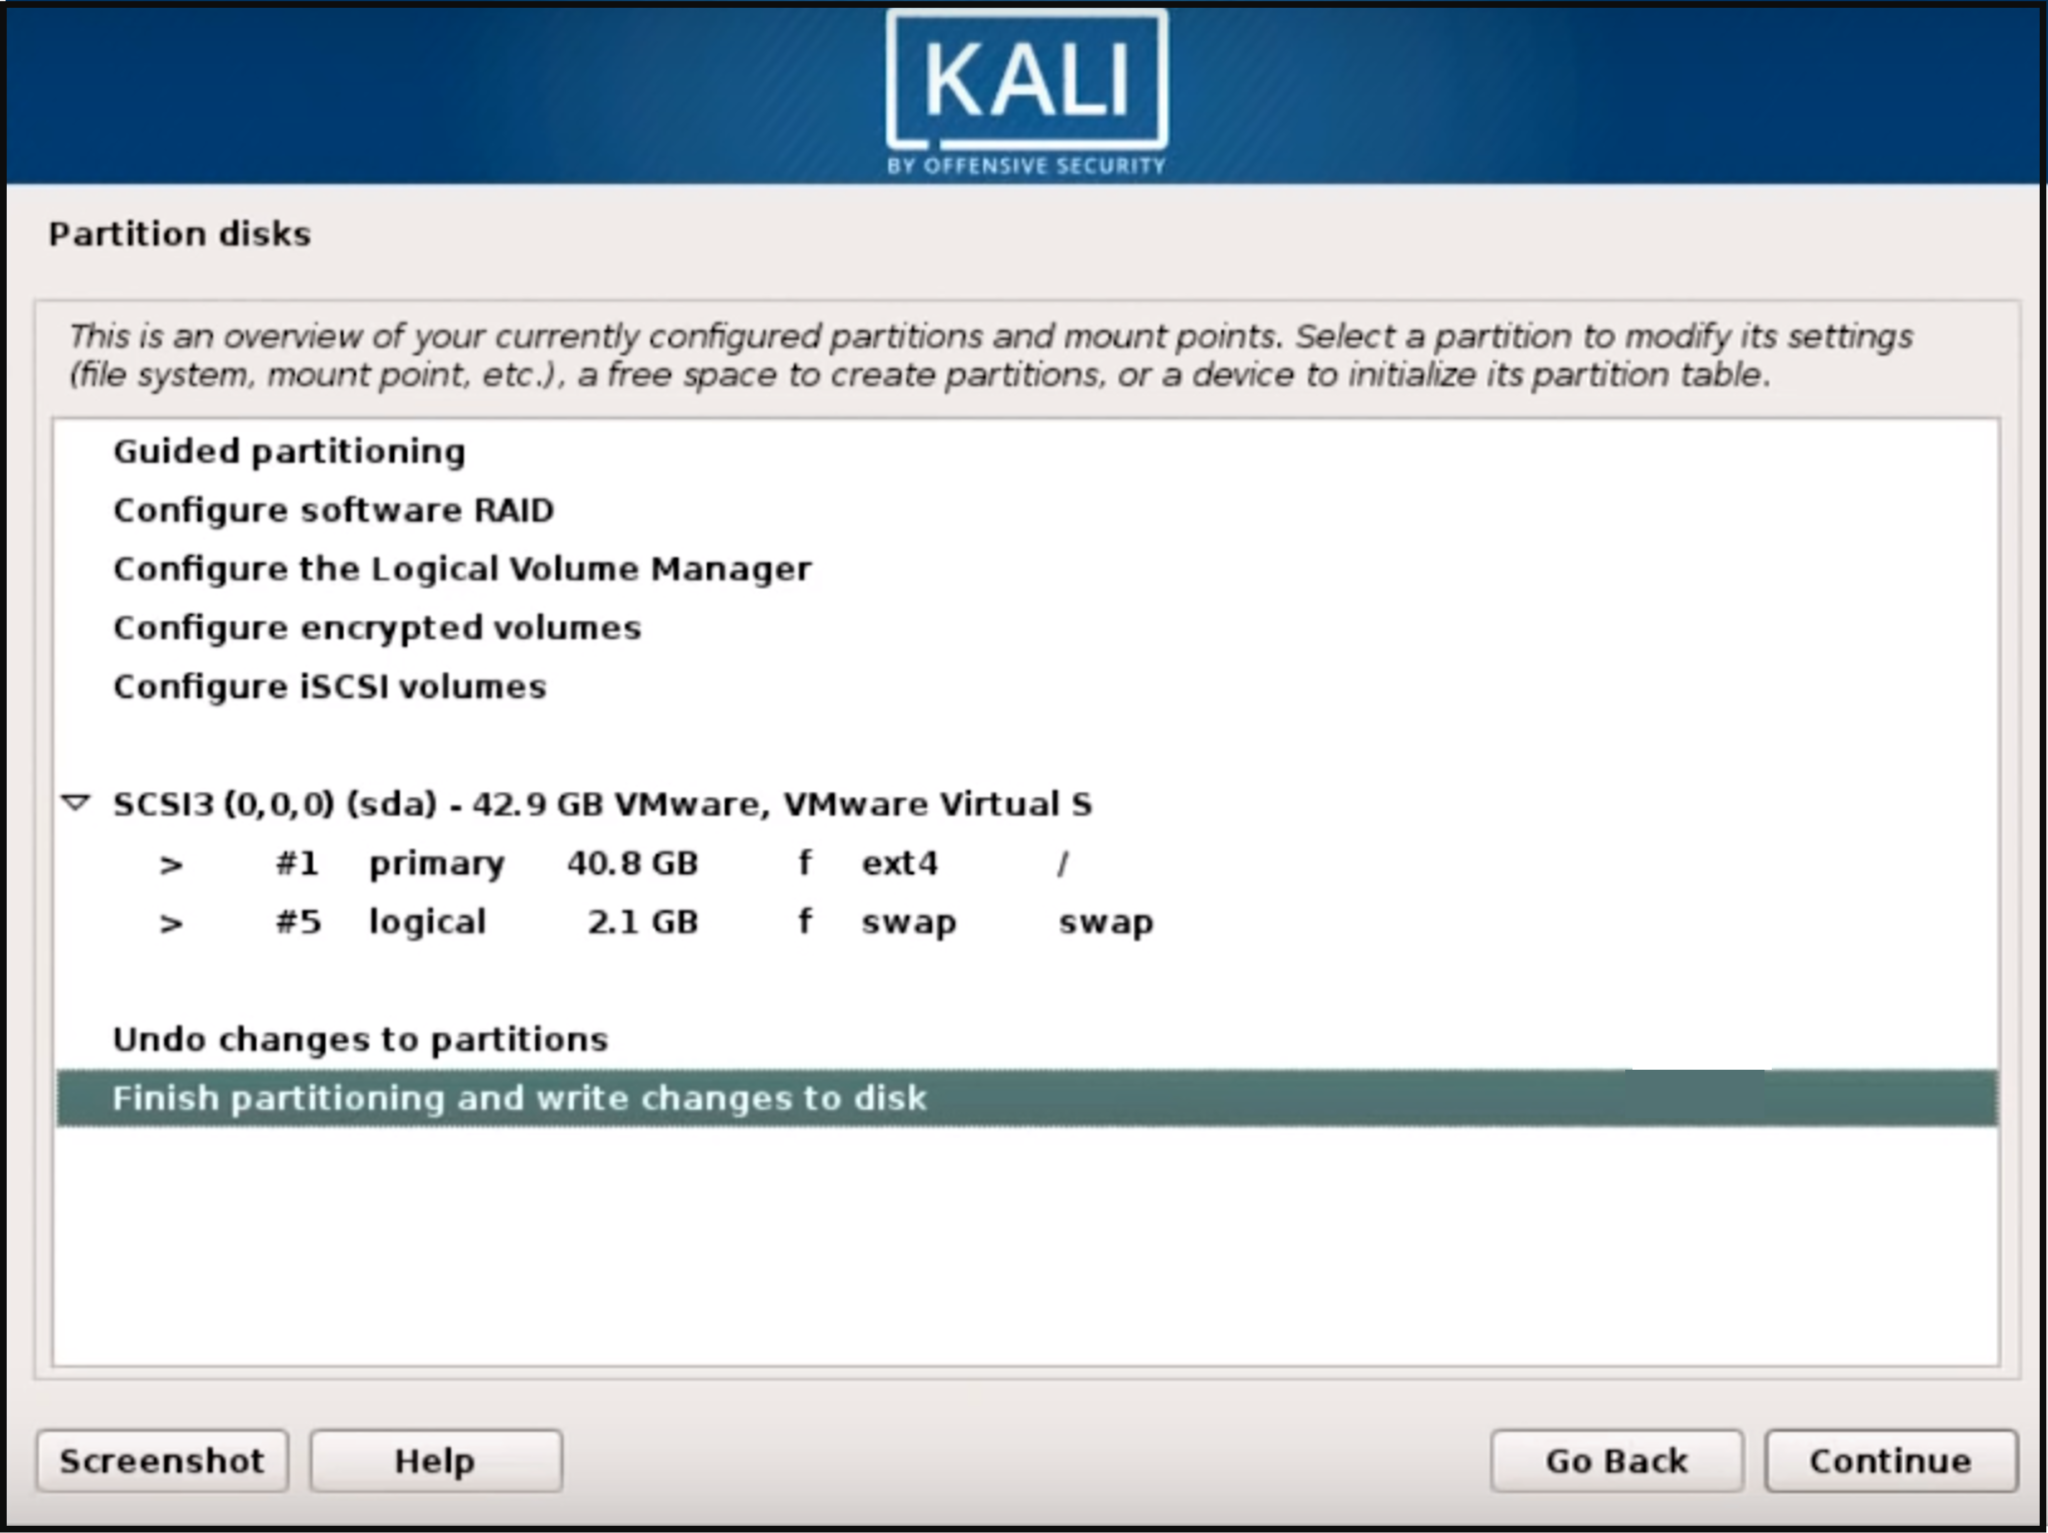 kali linux vmware download